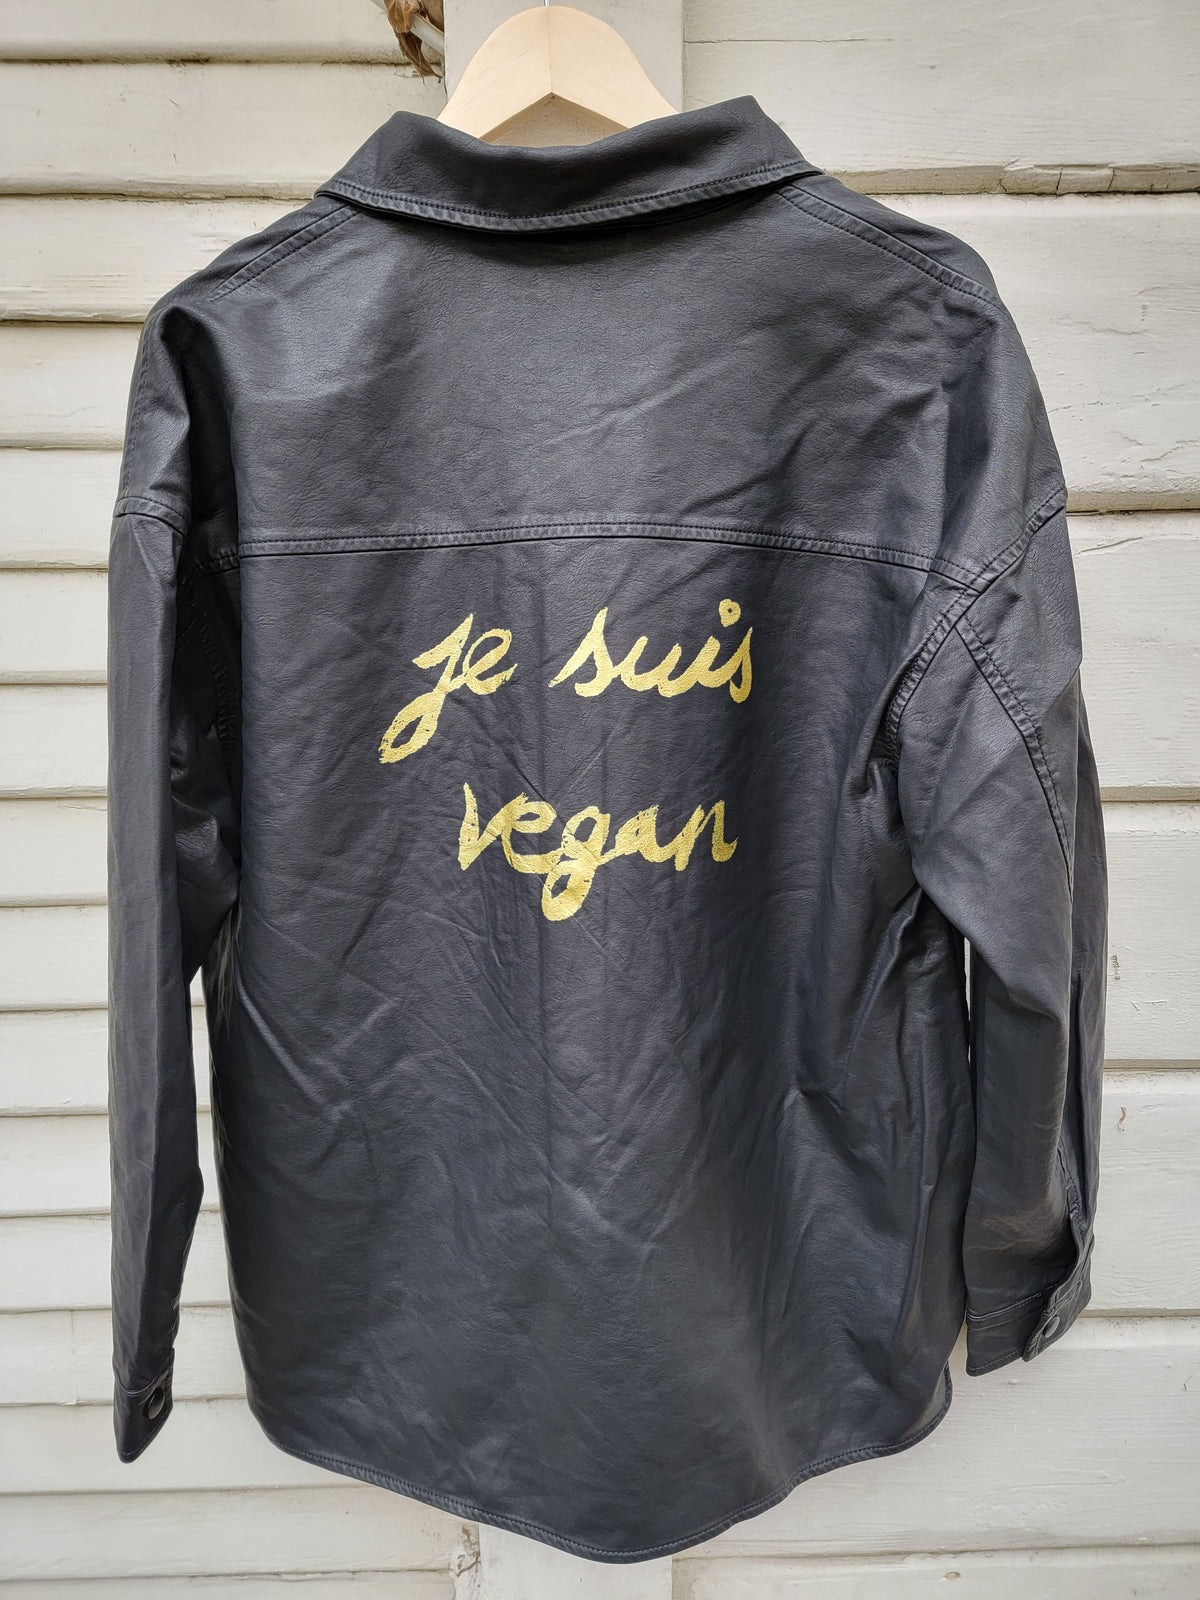 New 2022 Design - Vegan Club Faux Leather Jacket